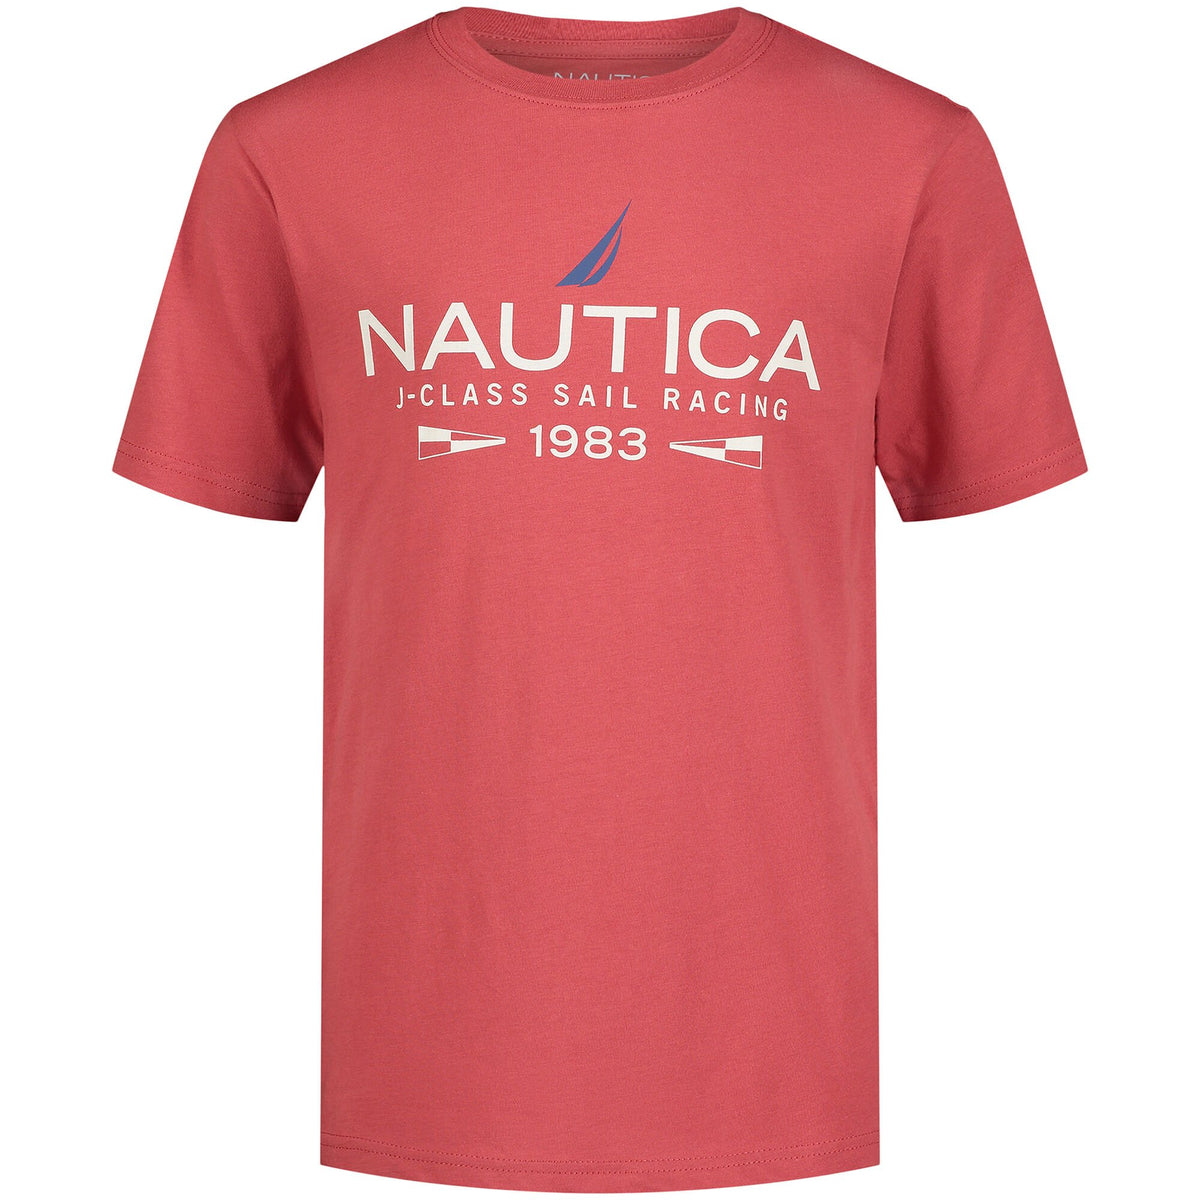 Nautica Toddler Boys’ J-Class Racing T-Shirt (2T-4T) Orchid Pink